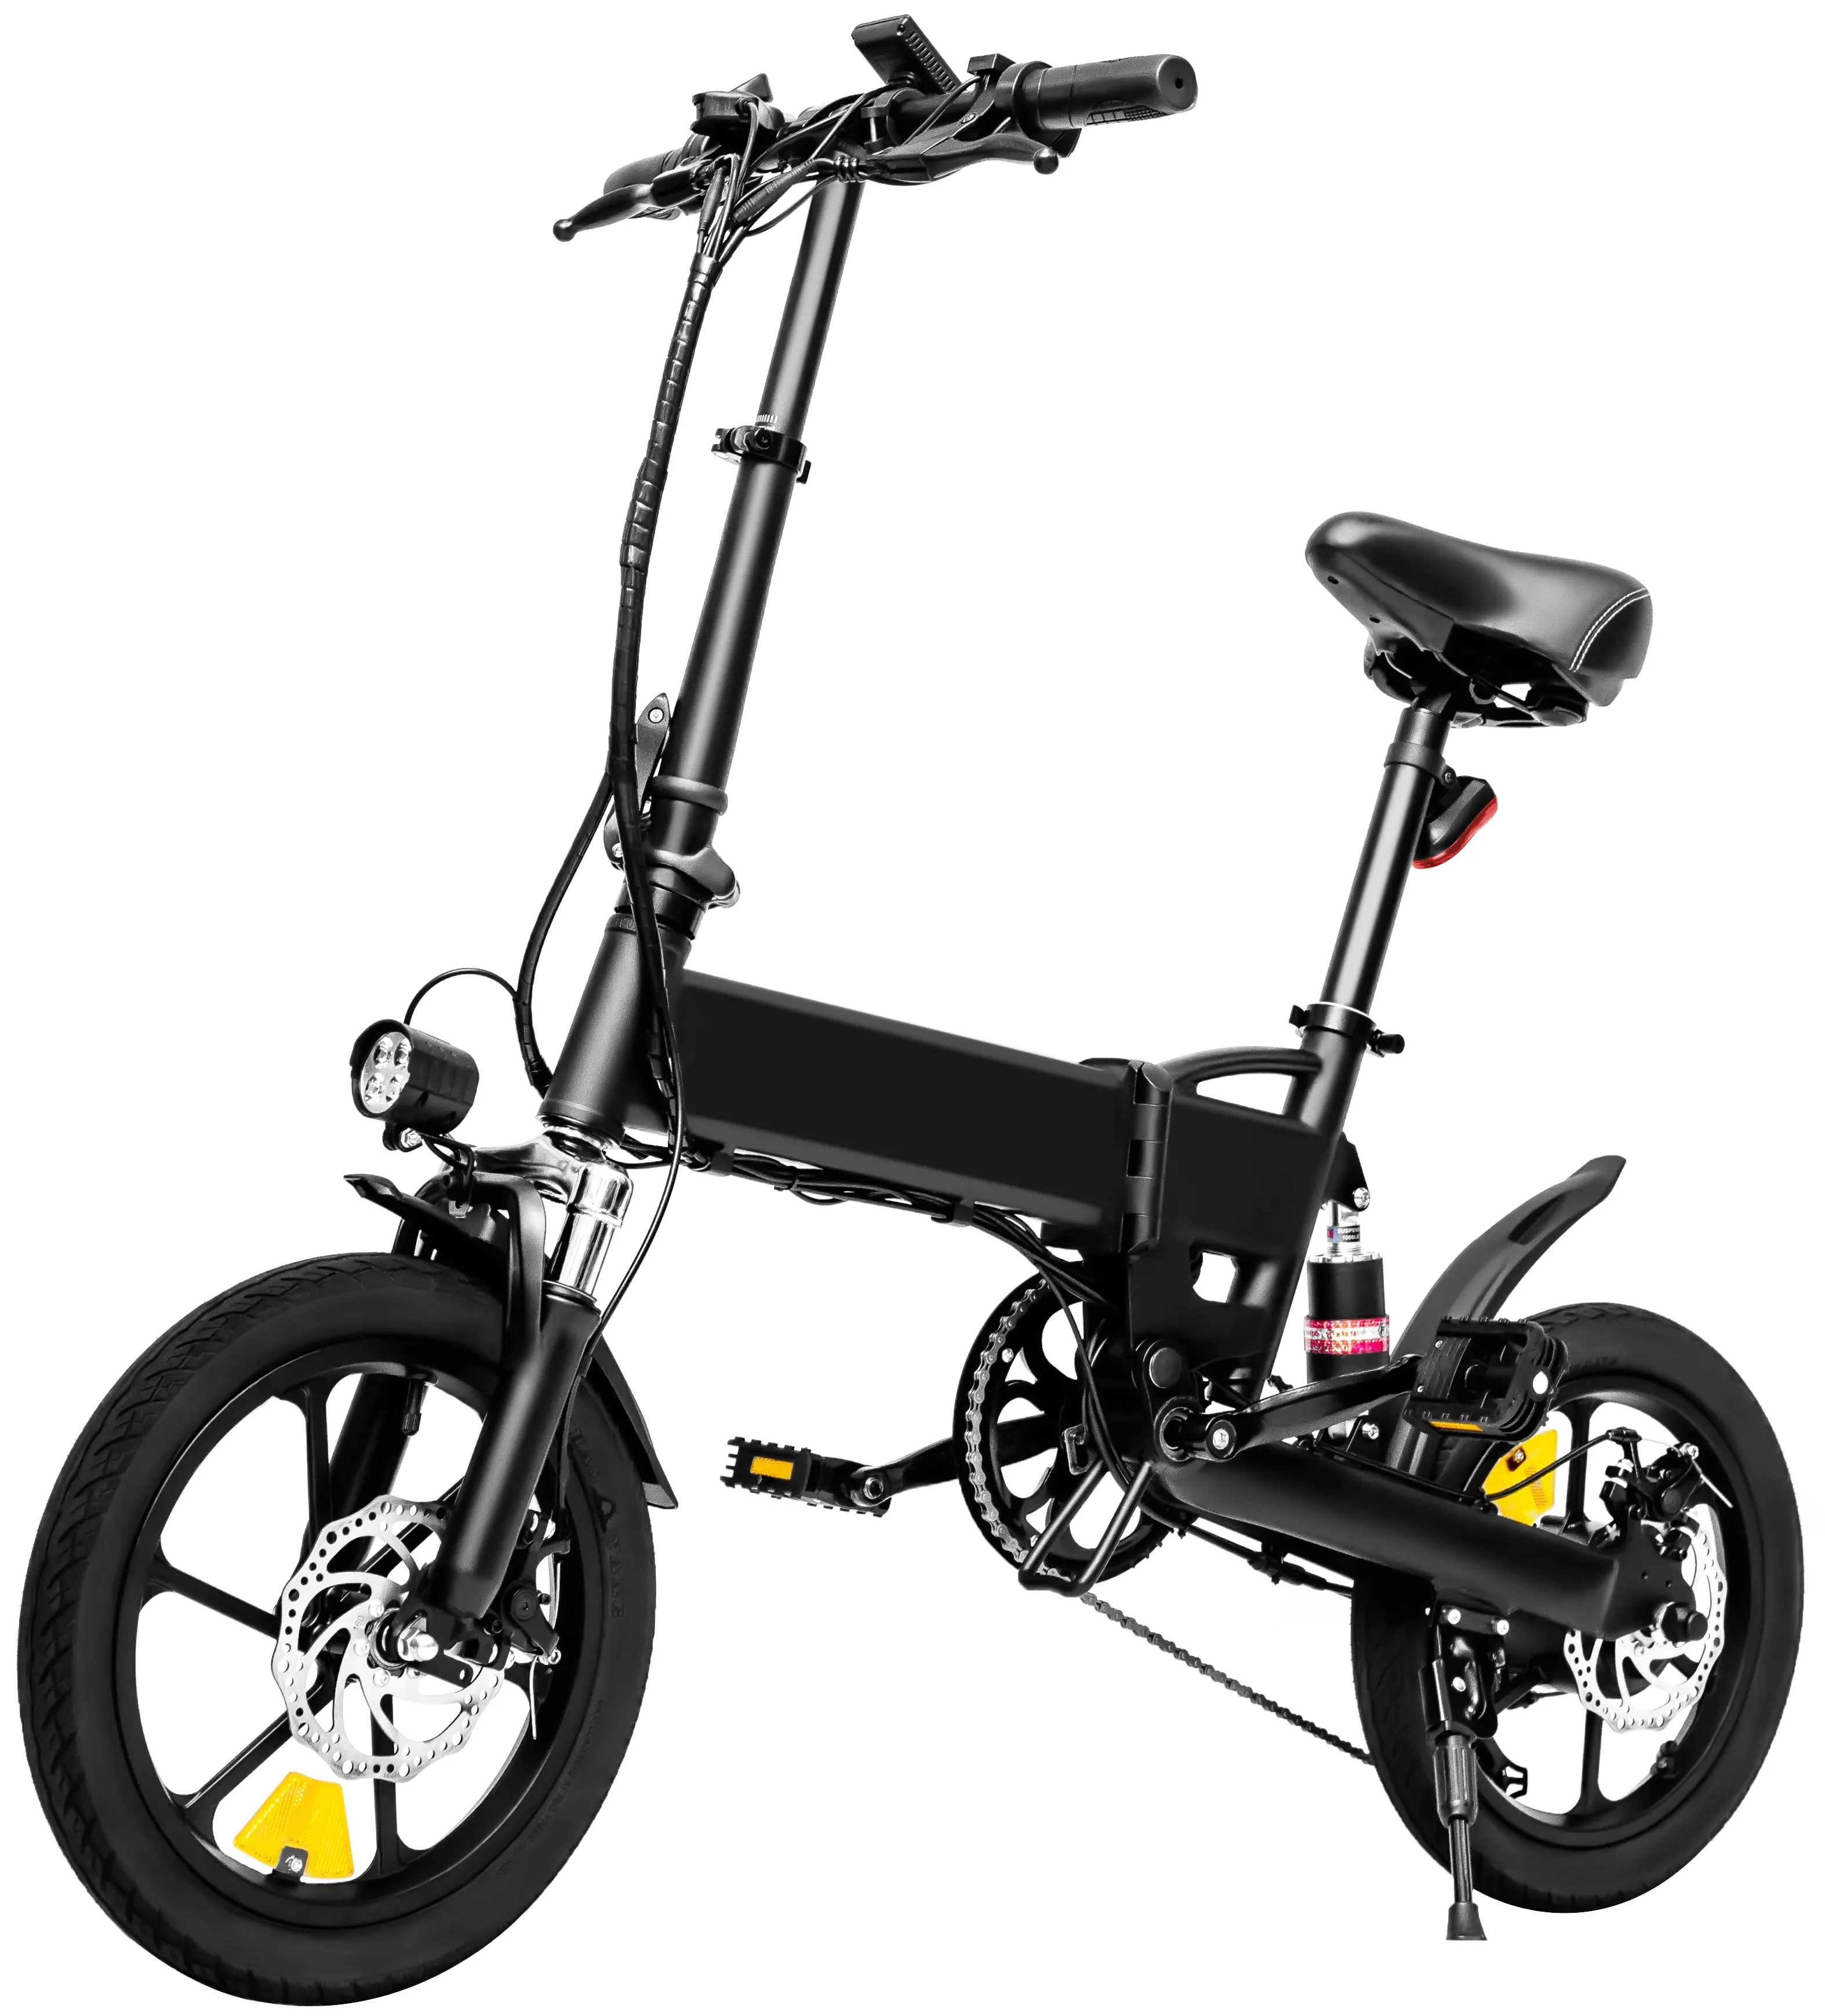 E-bike sepeda listrik, e-bike sepeda gunung 14 inci ban gemuk 750w ebike sepeda listrik electrica city bike untuk dijual